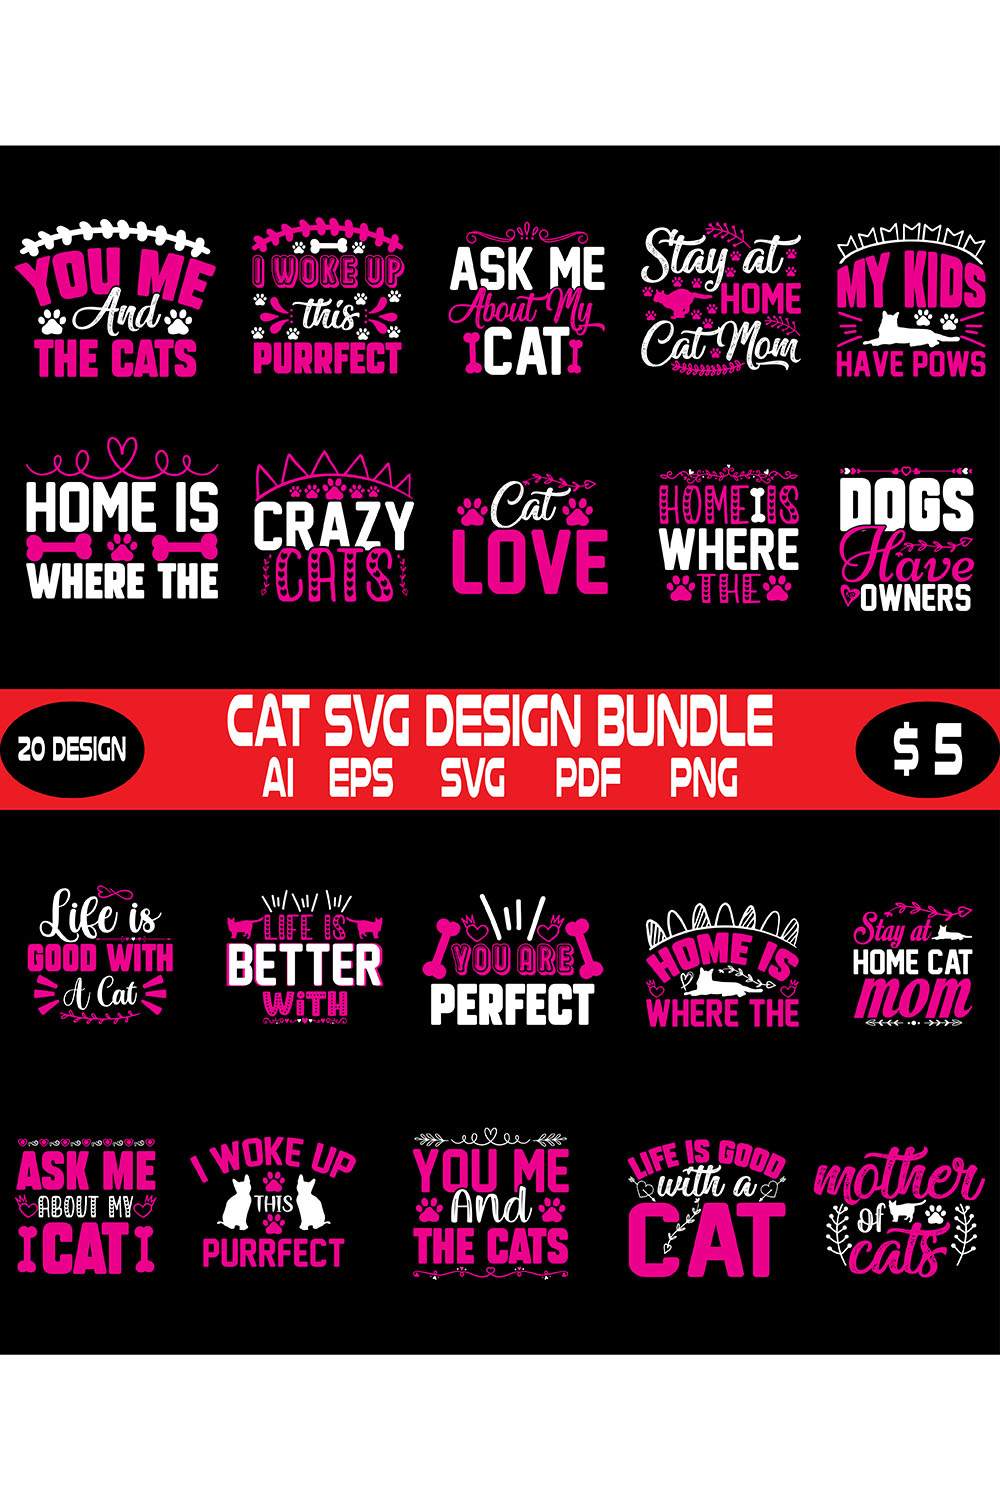 Cat Svg Design Bundle pinterest preview image.